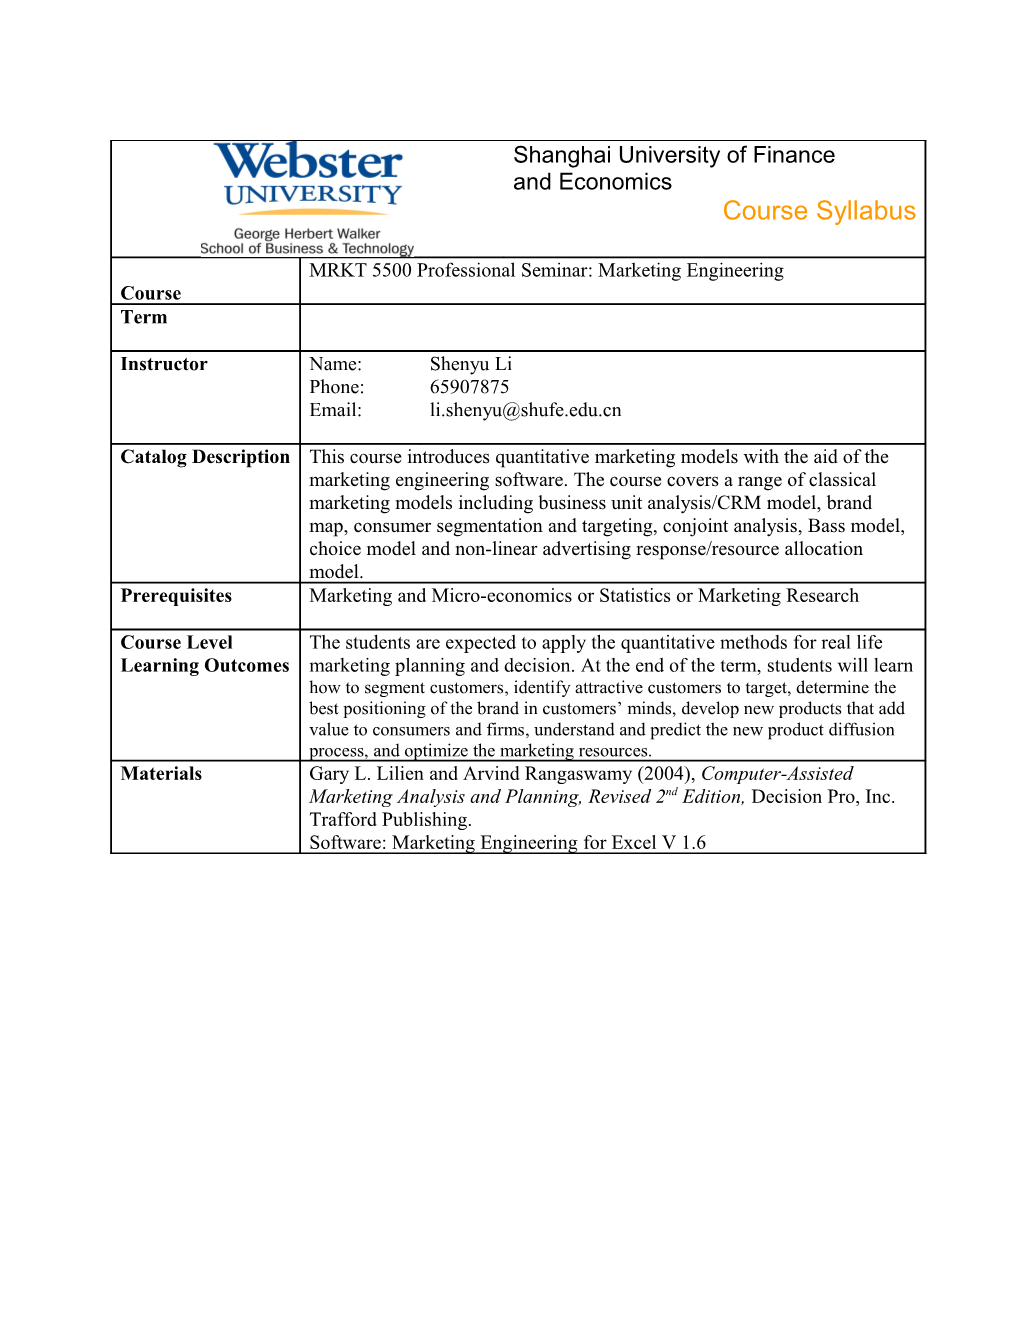 Webster University - Syllabus s1